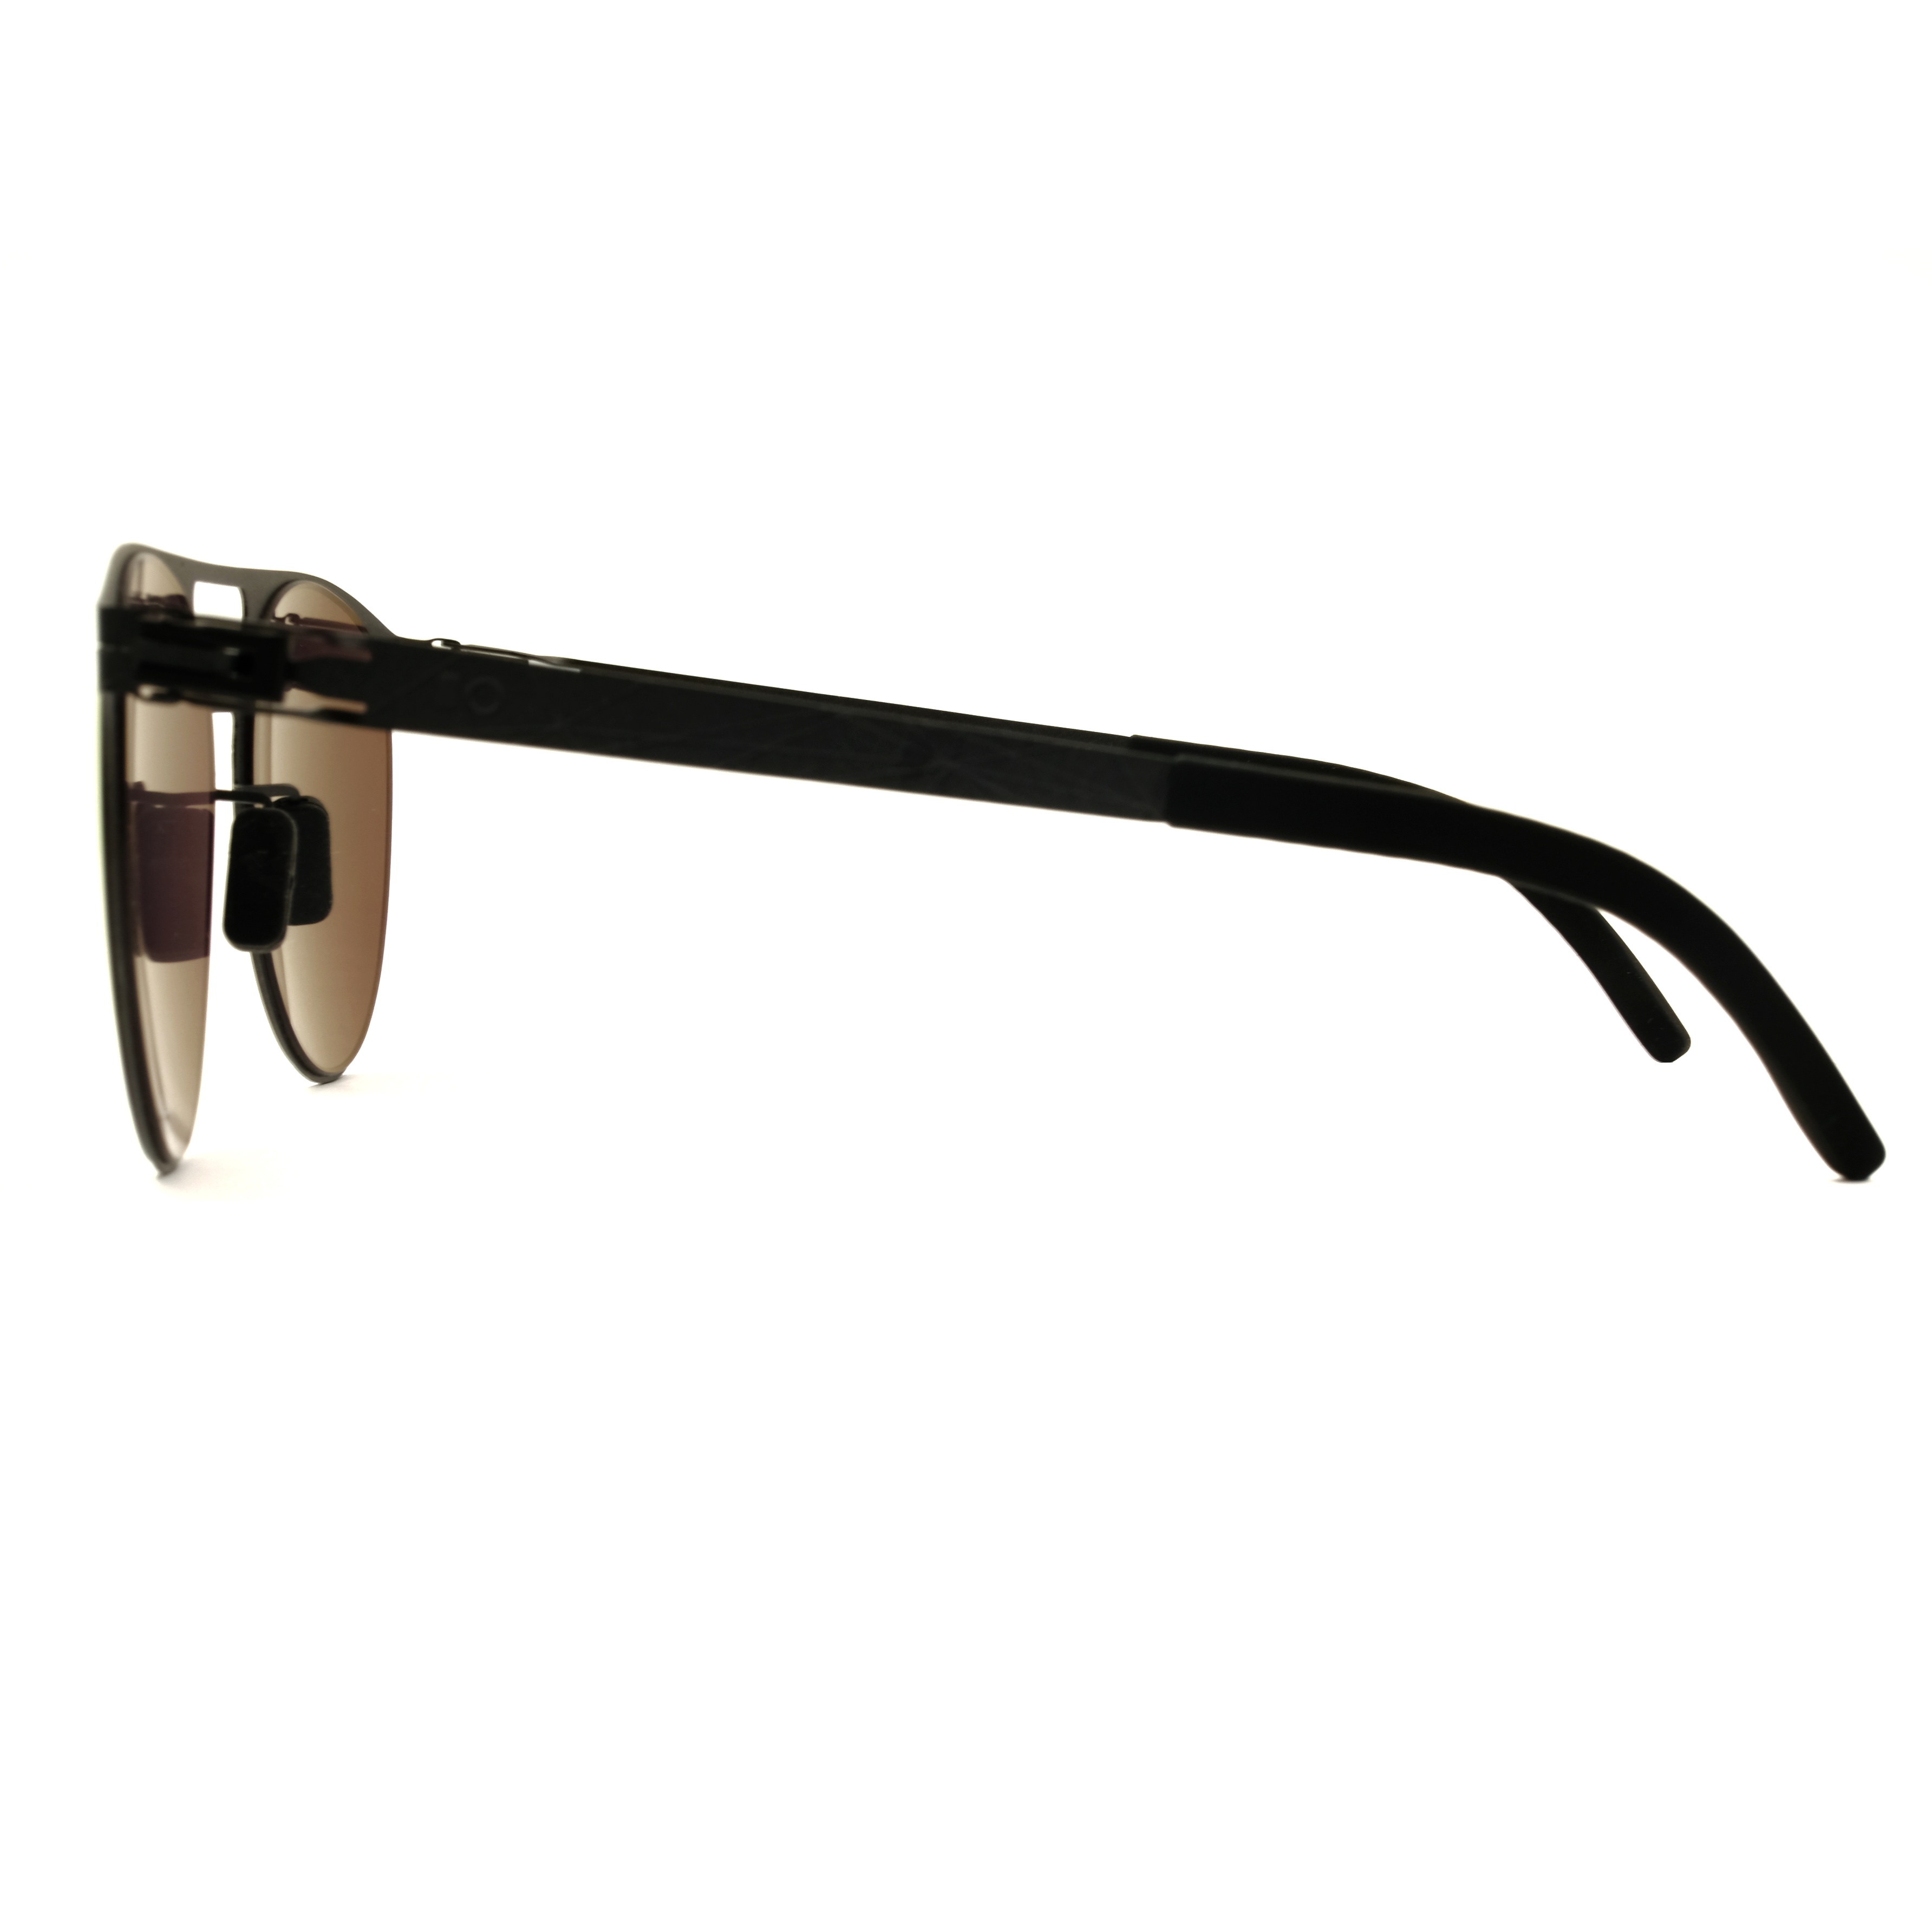 RTS Sunglasses mens river sun glasses river Sunglasses 2021 Fashion Trend Men Women Travel Sports Party Business